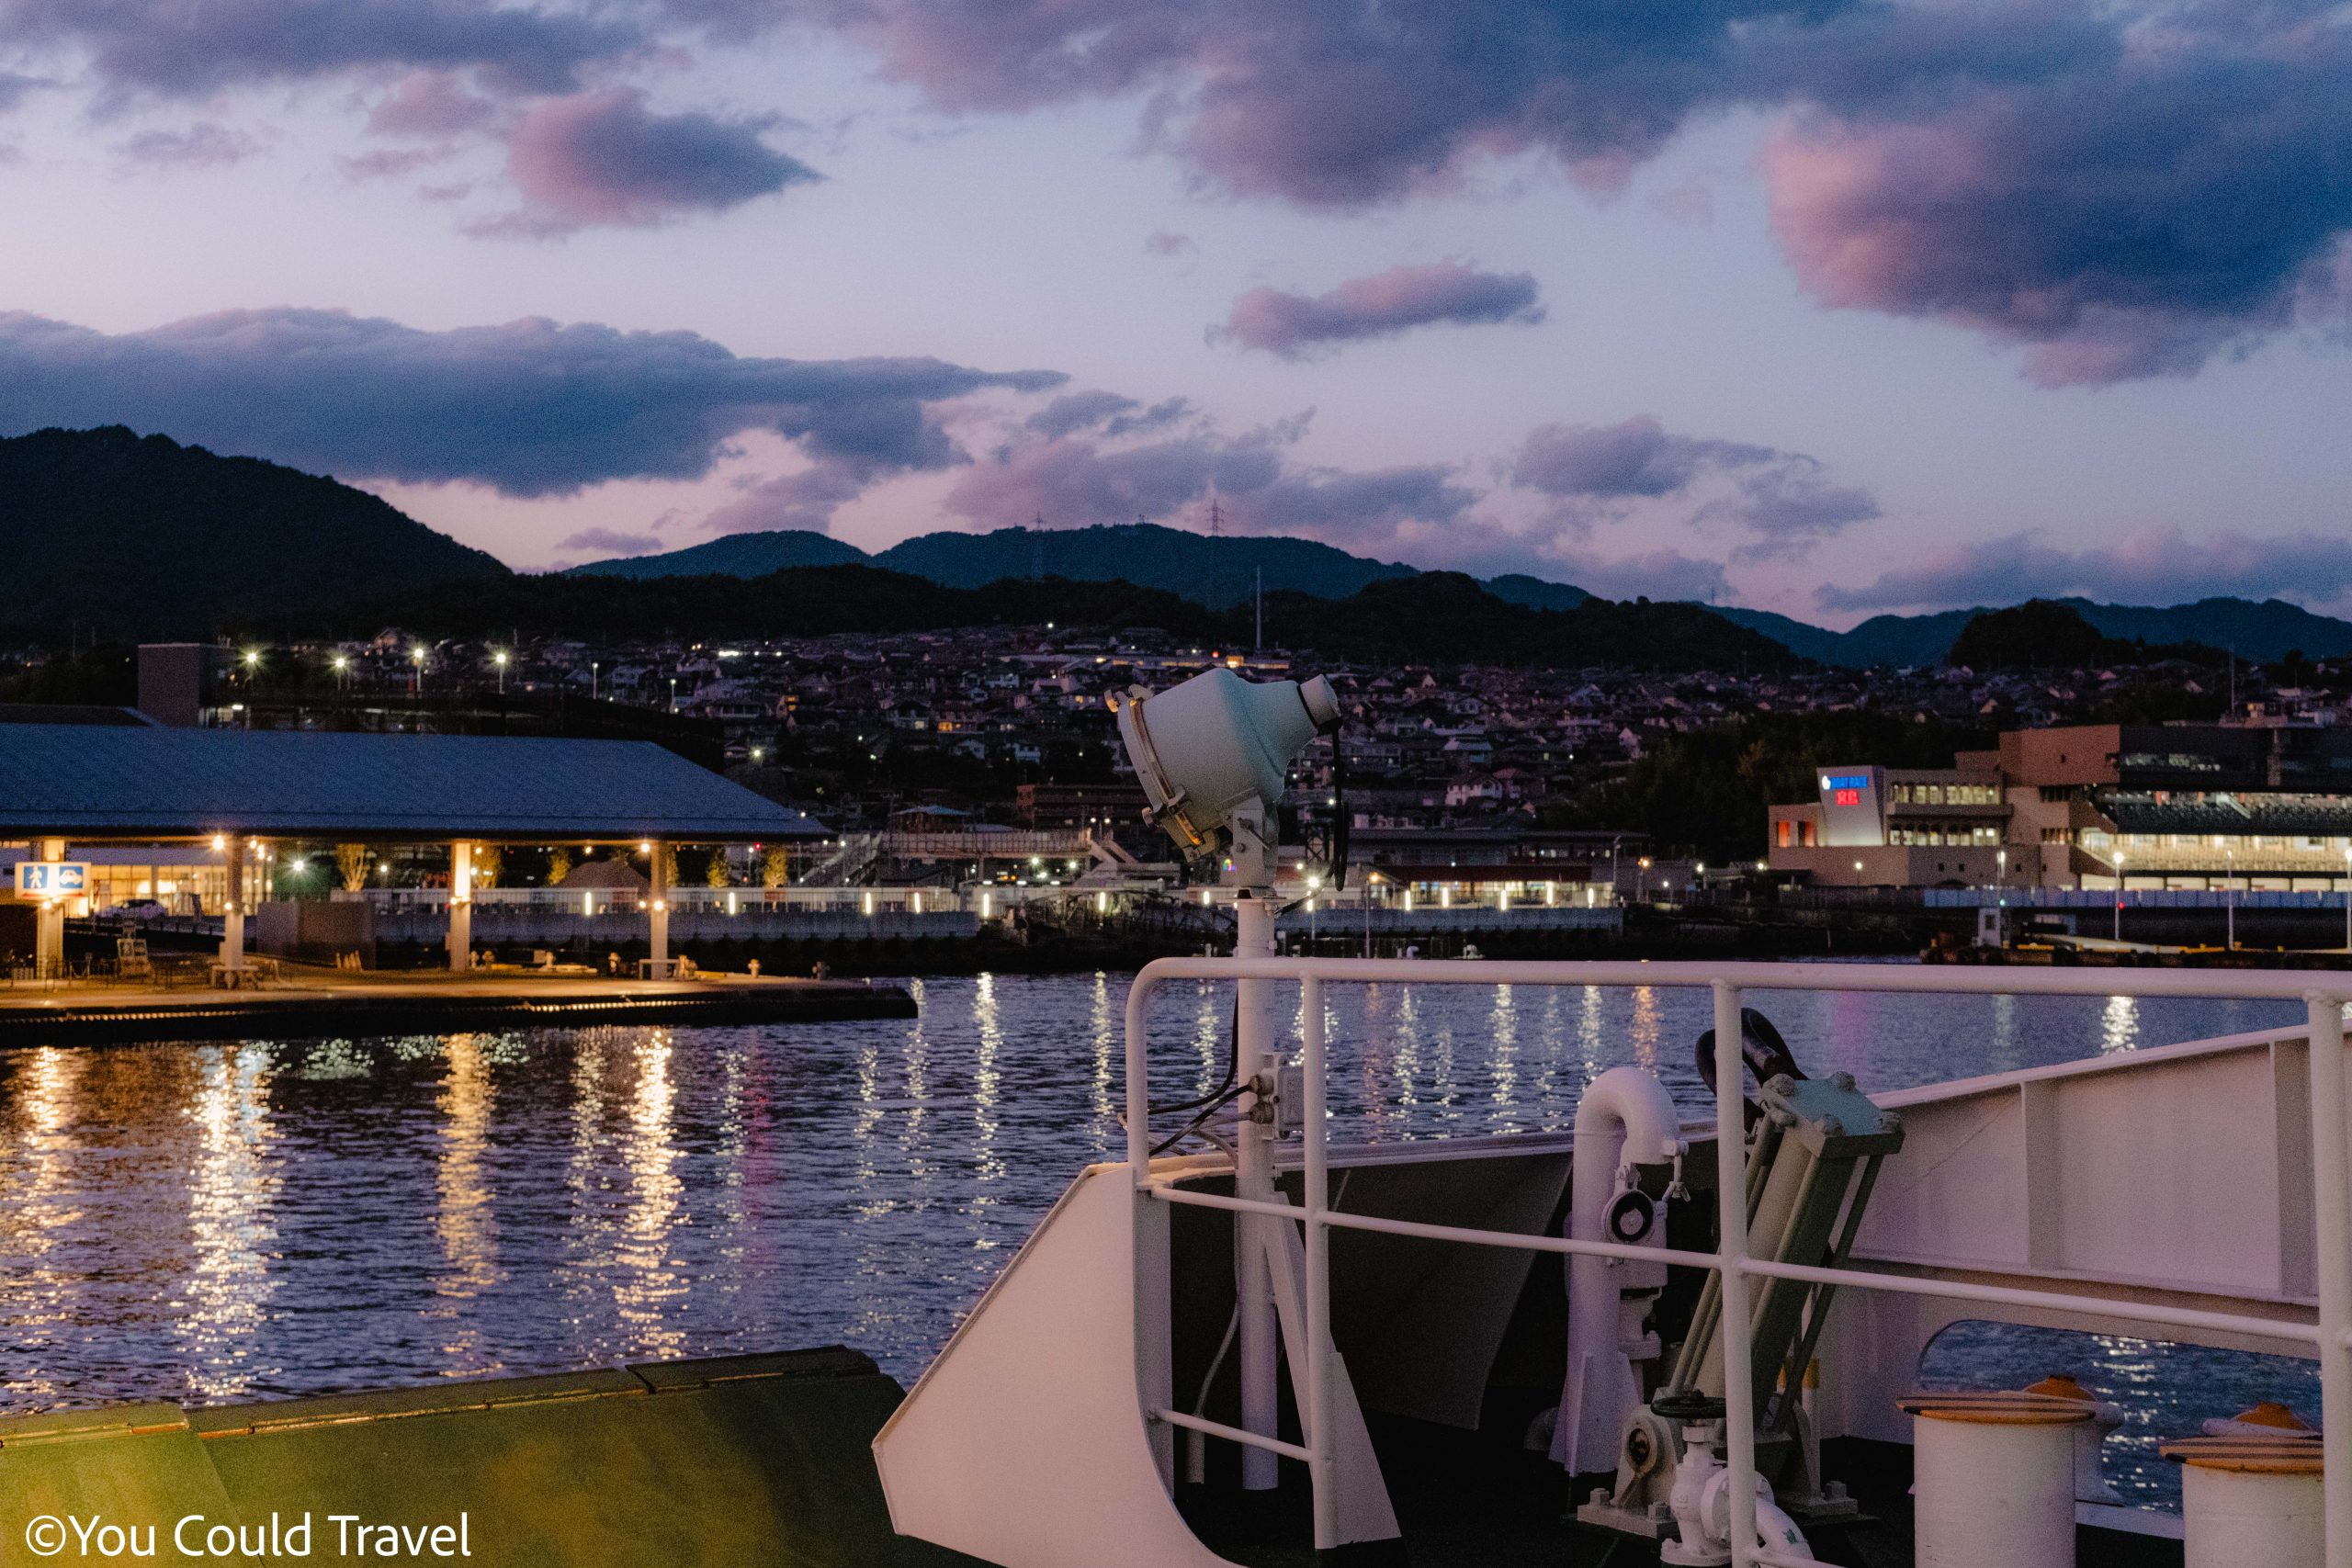 Taking the evening ferry from Miyajima to Hiroshima